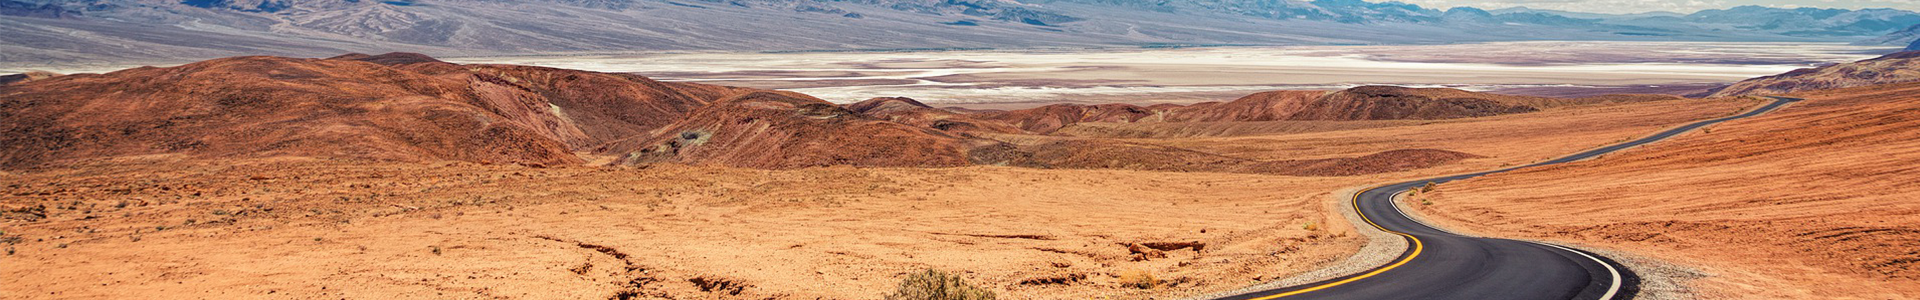 Orientation banner: Road winding through desert landscape